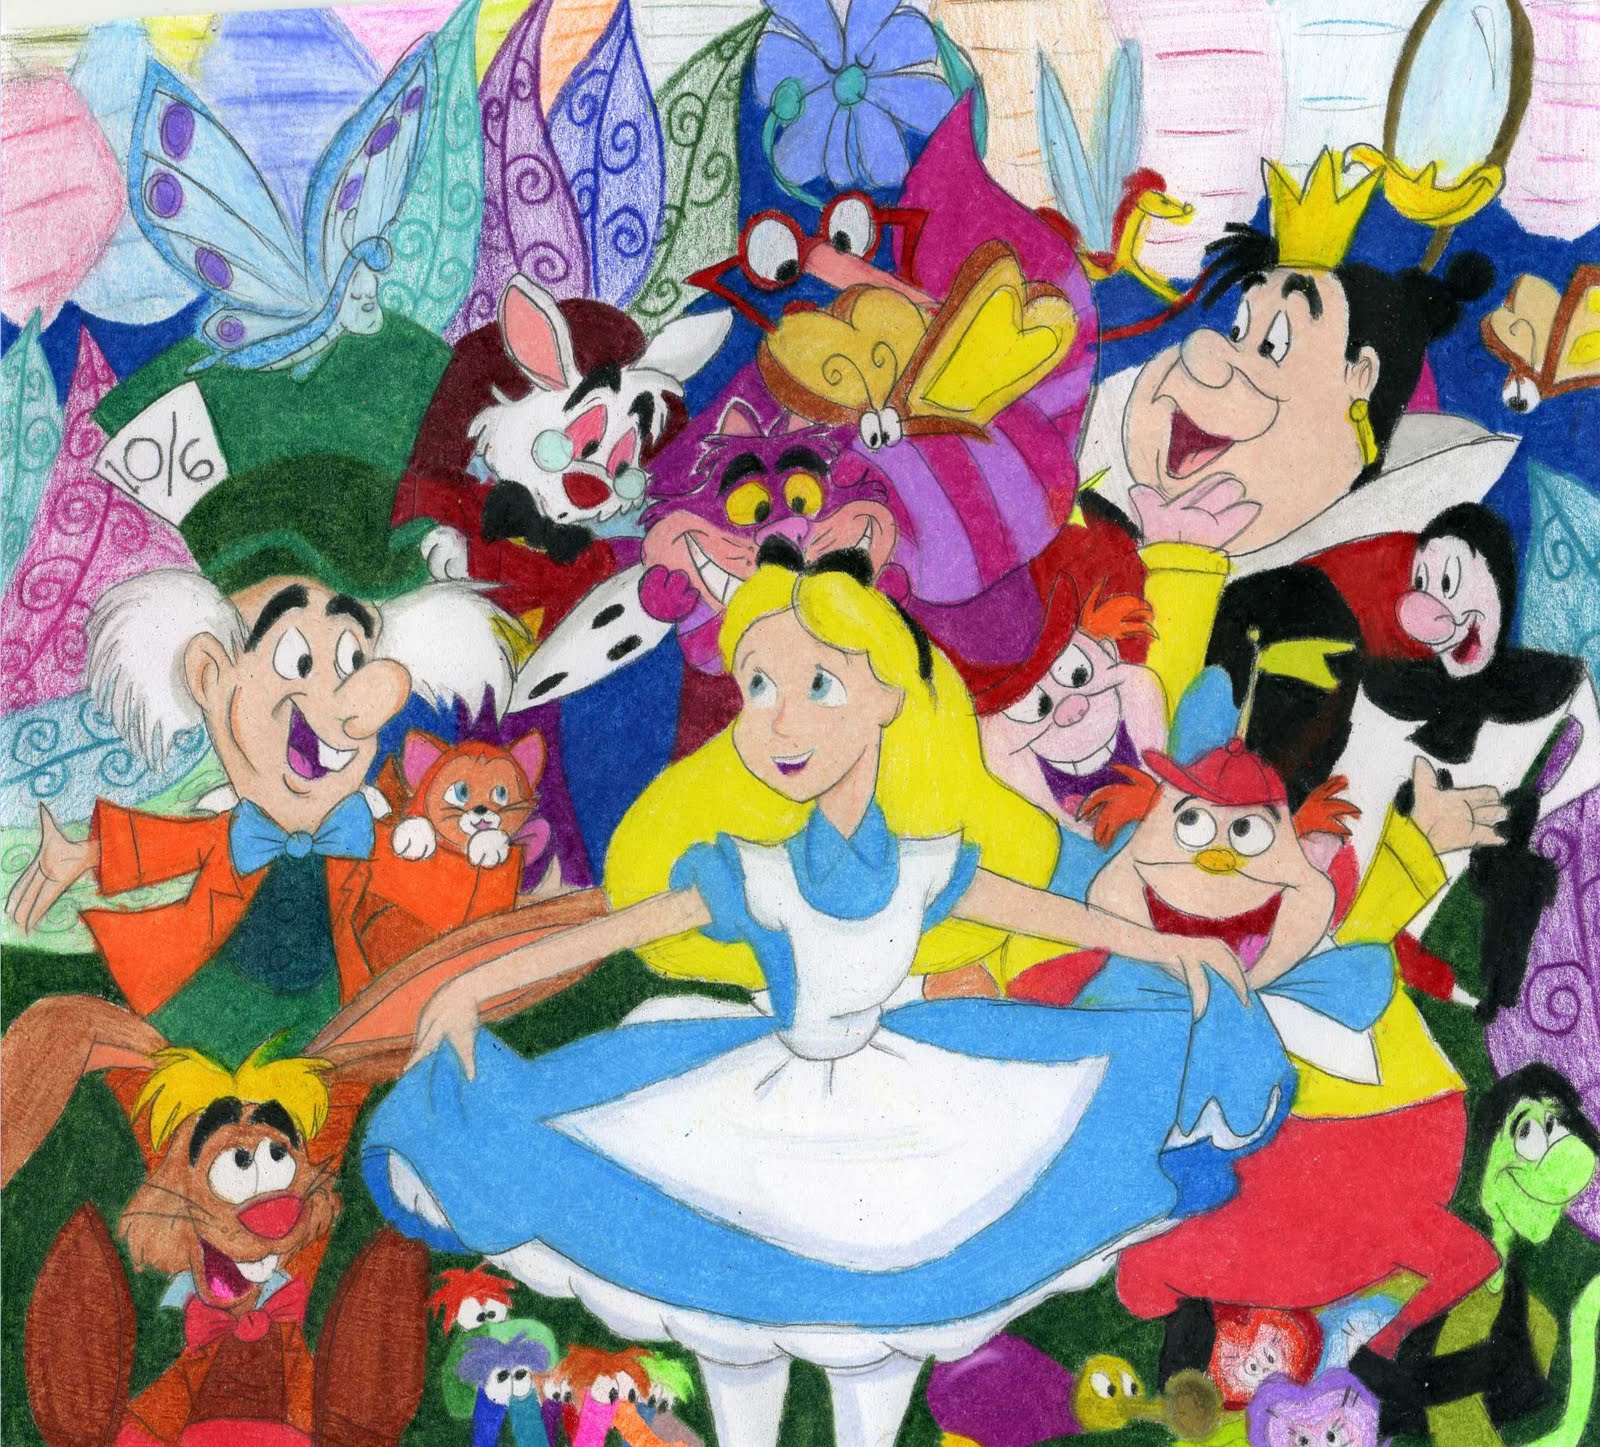  48  Disney Alice in Wonderland Wallpaper on WallpaperSafari